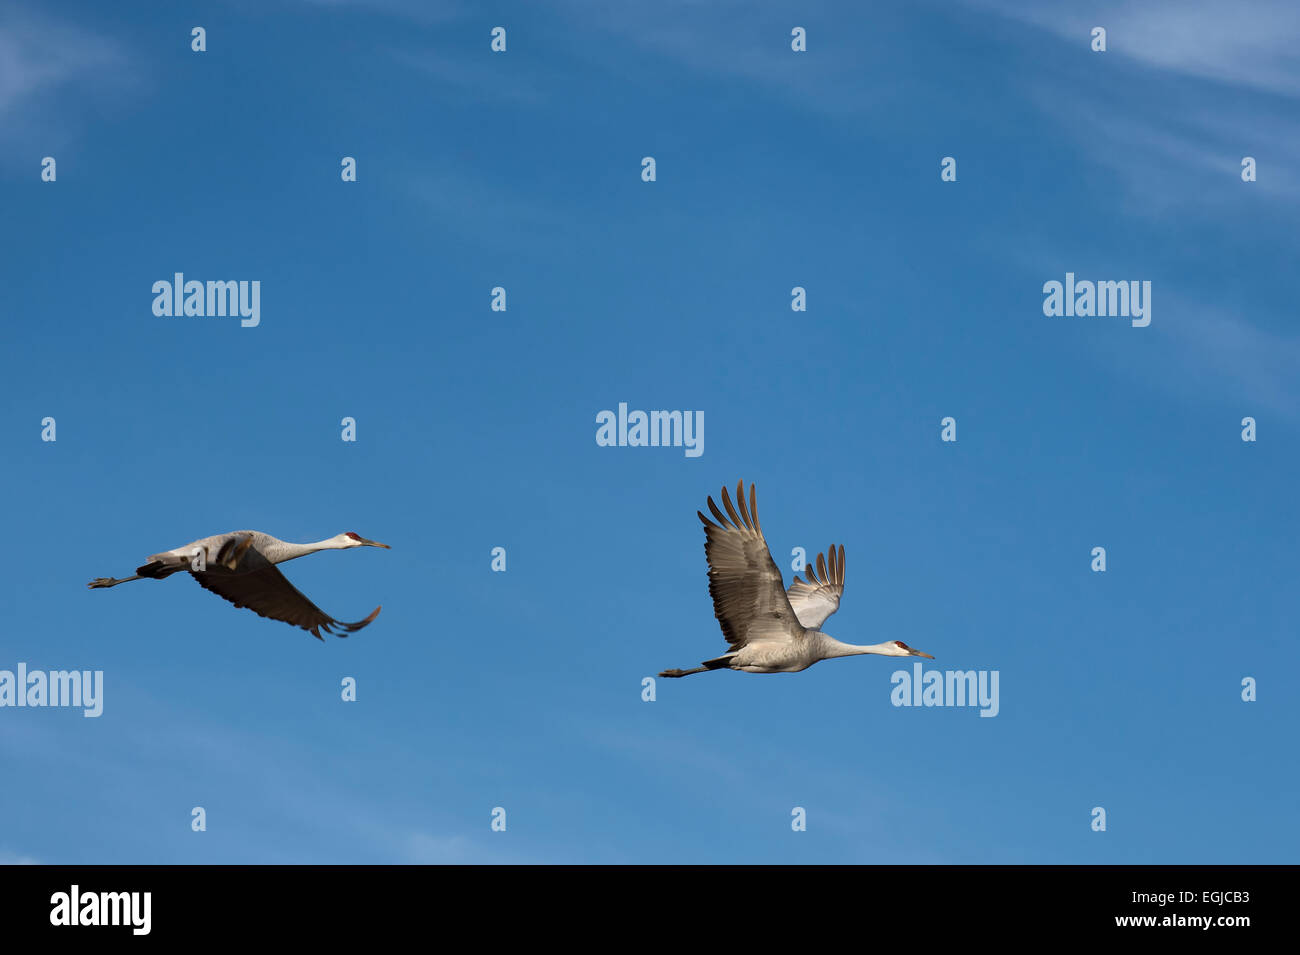 Sandhill cranes flying in the sky of Bosque Del Apache in New Mexico, USA Stock Photo